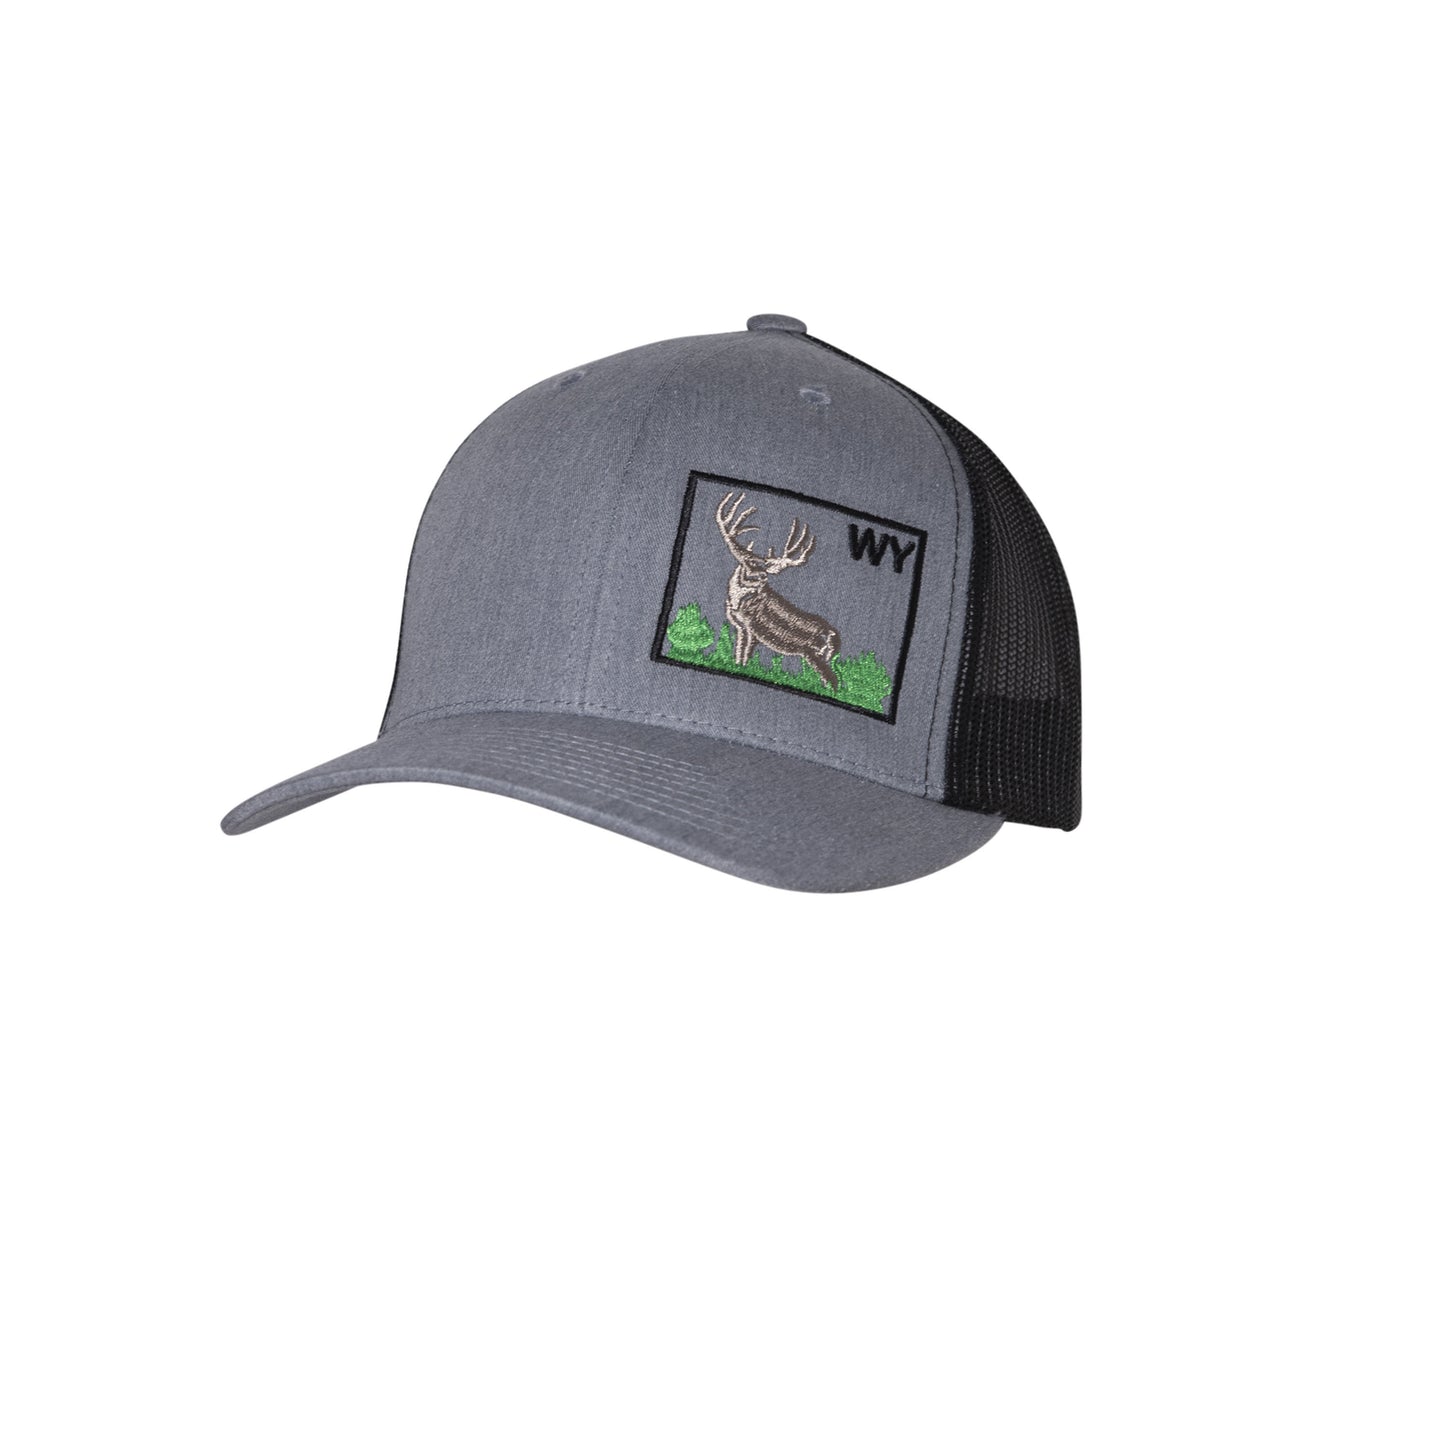 HDW78946- Wyoming Baseball Cap Assortment